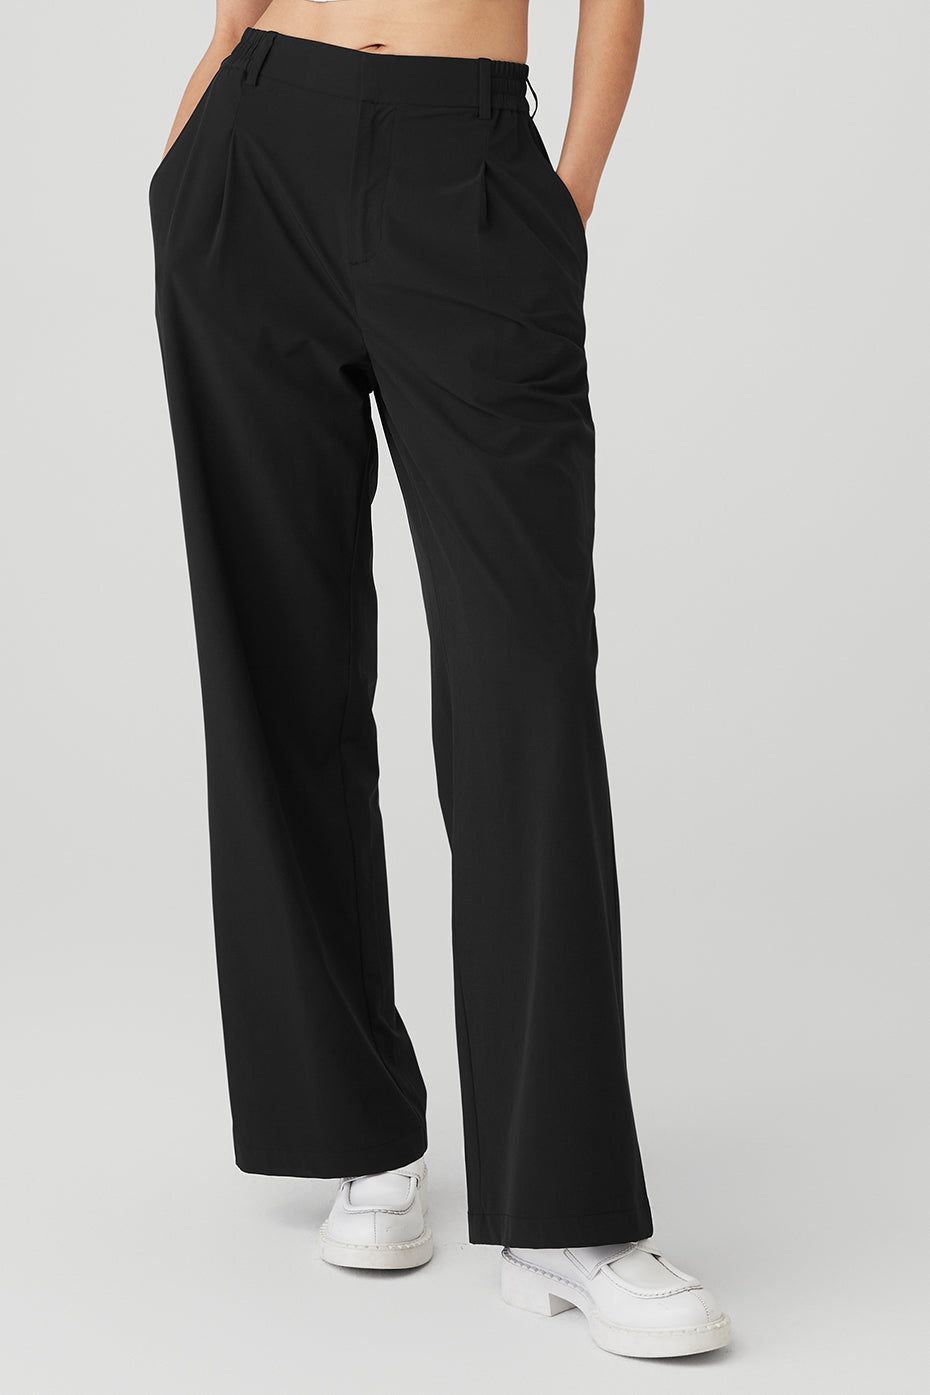 Black Trousers For Women - Pants for Women